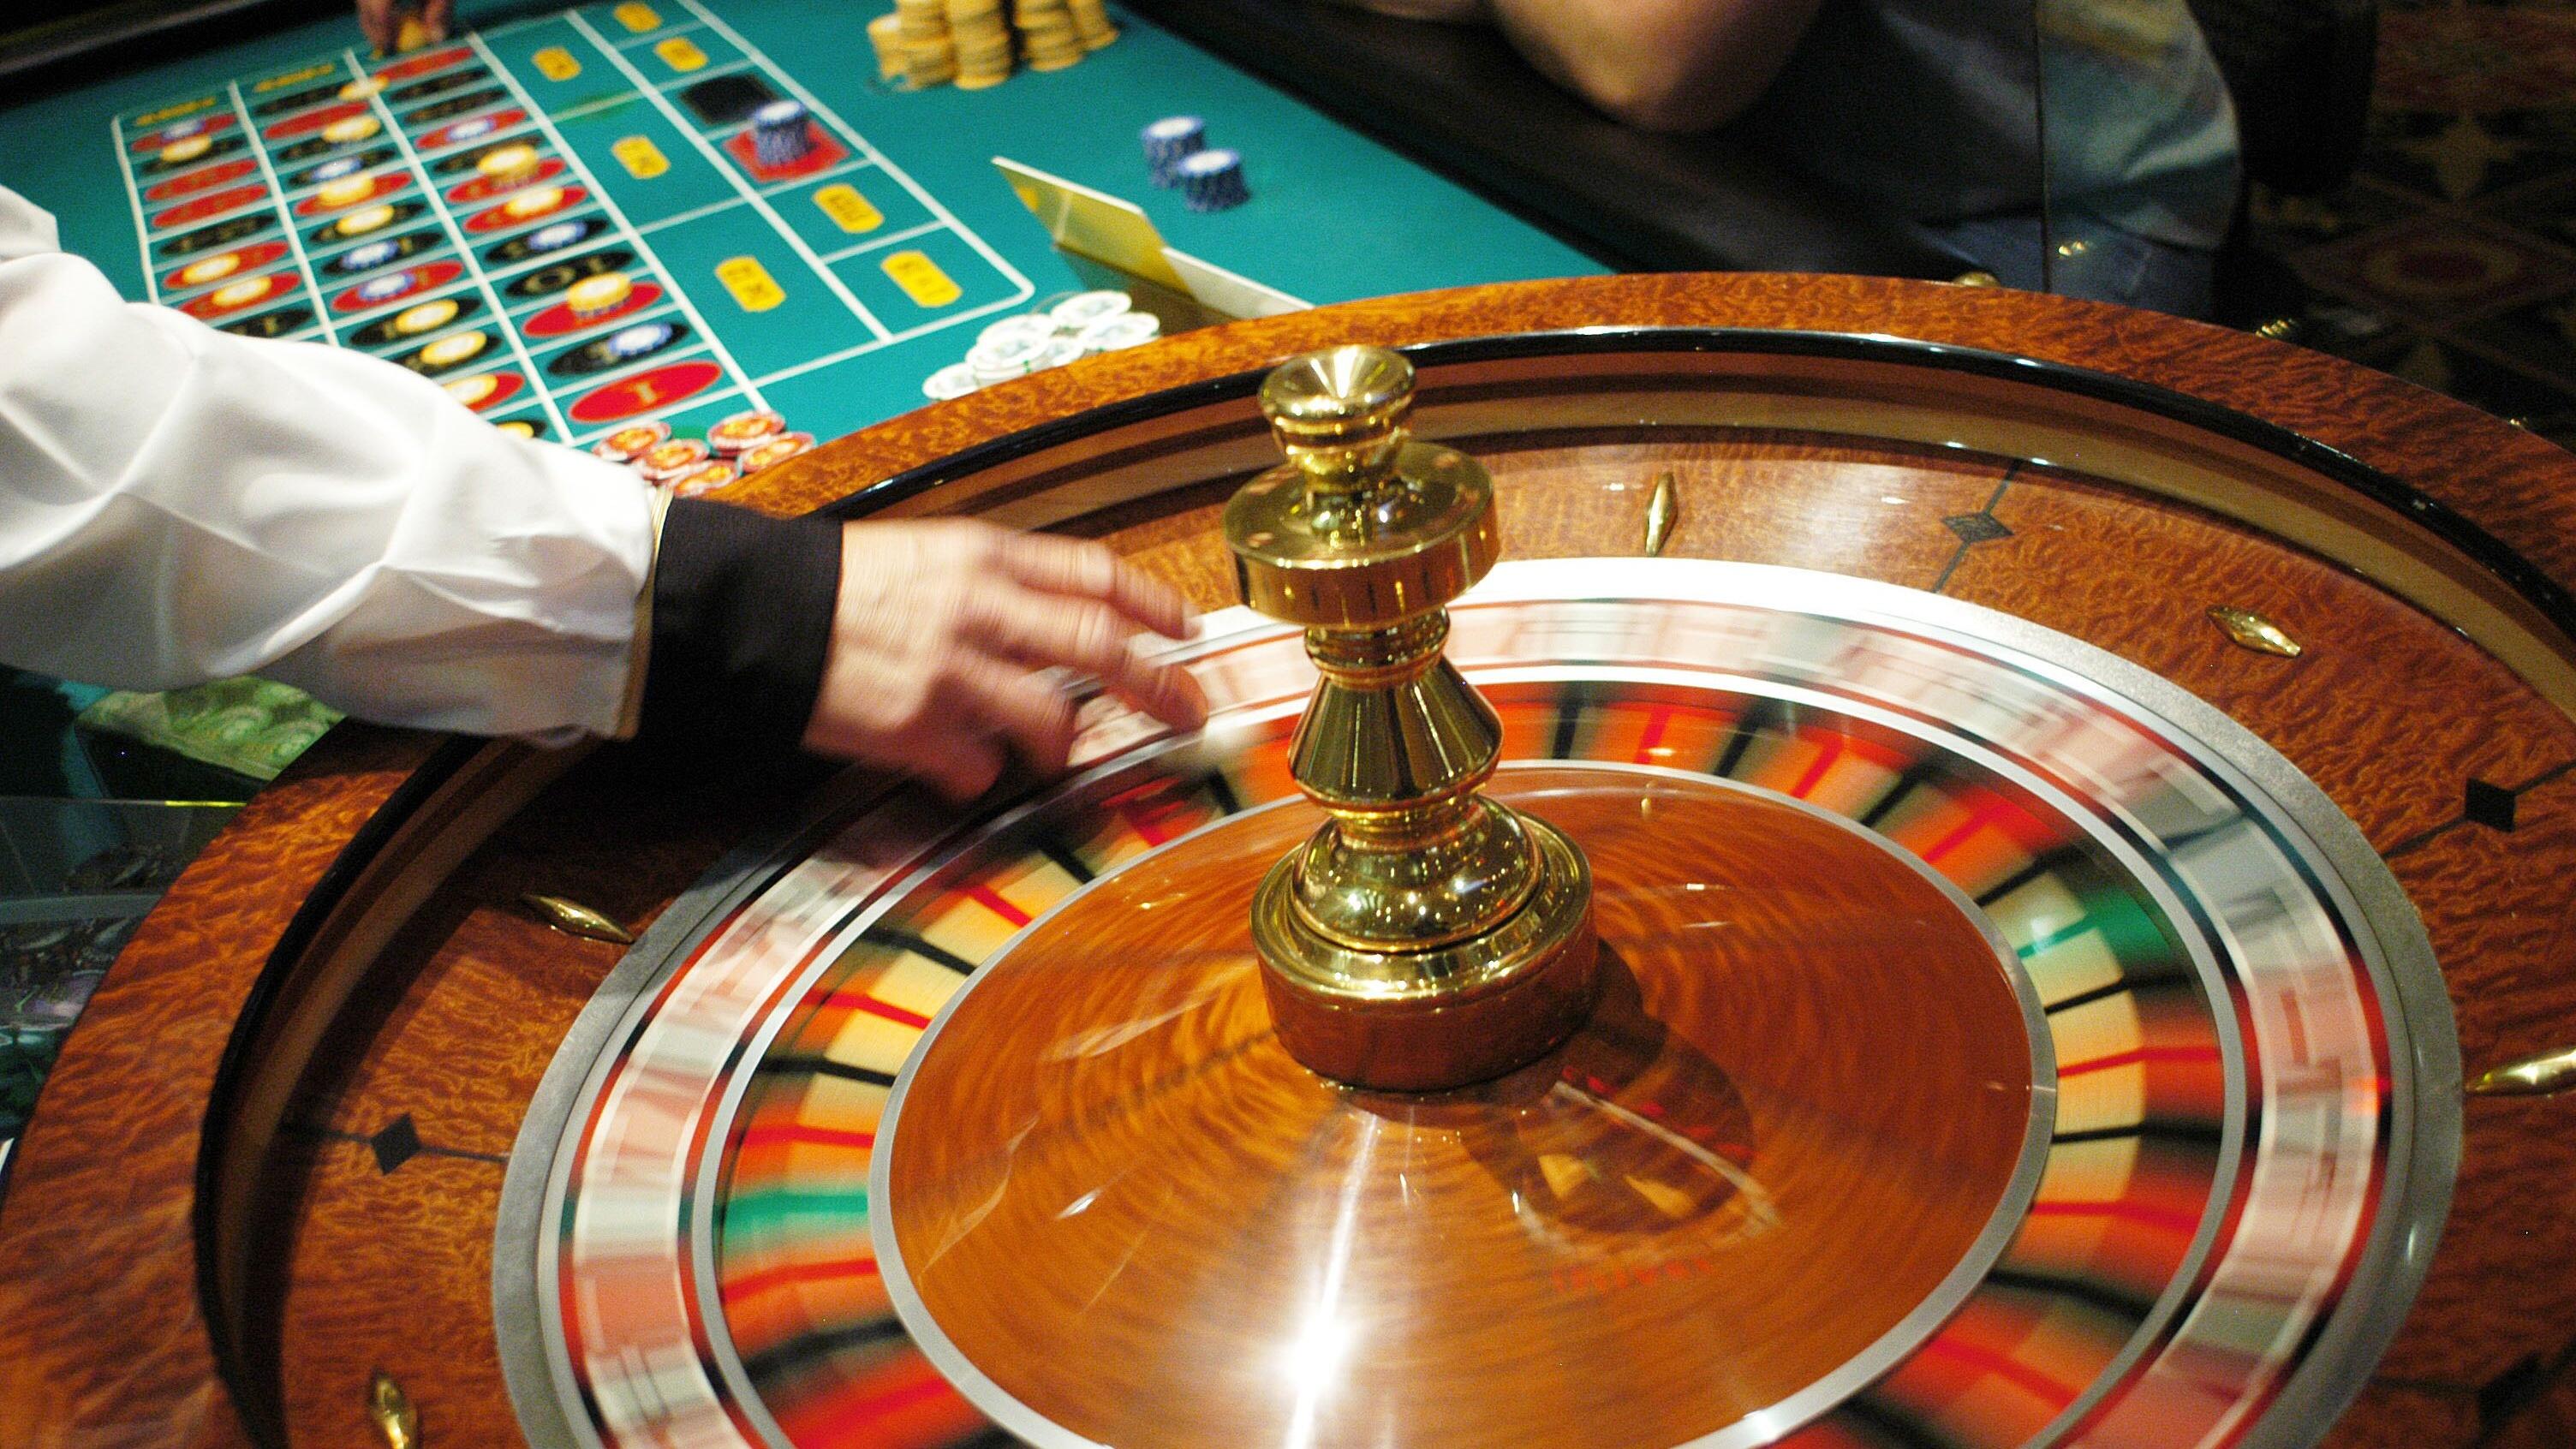 Наказание за игру в онлайн казино в россии кто играет онлайн казино